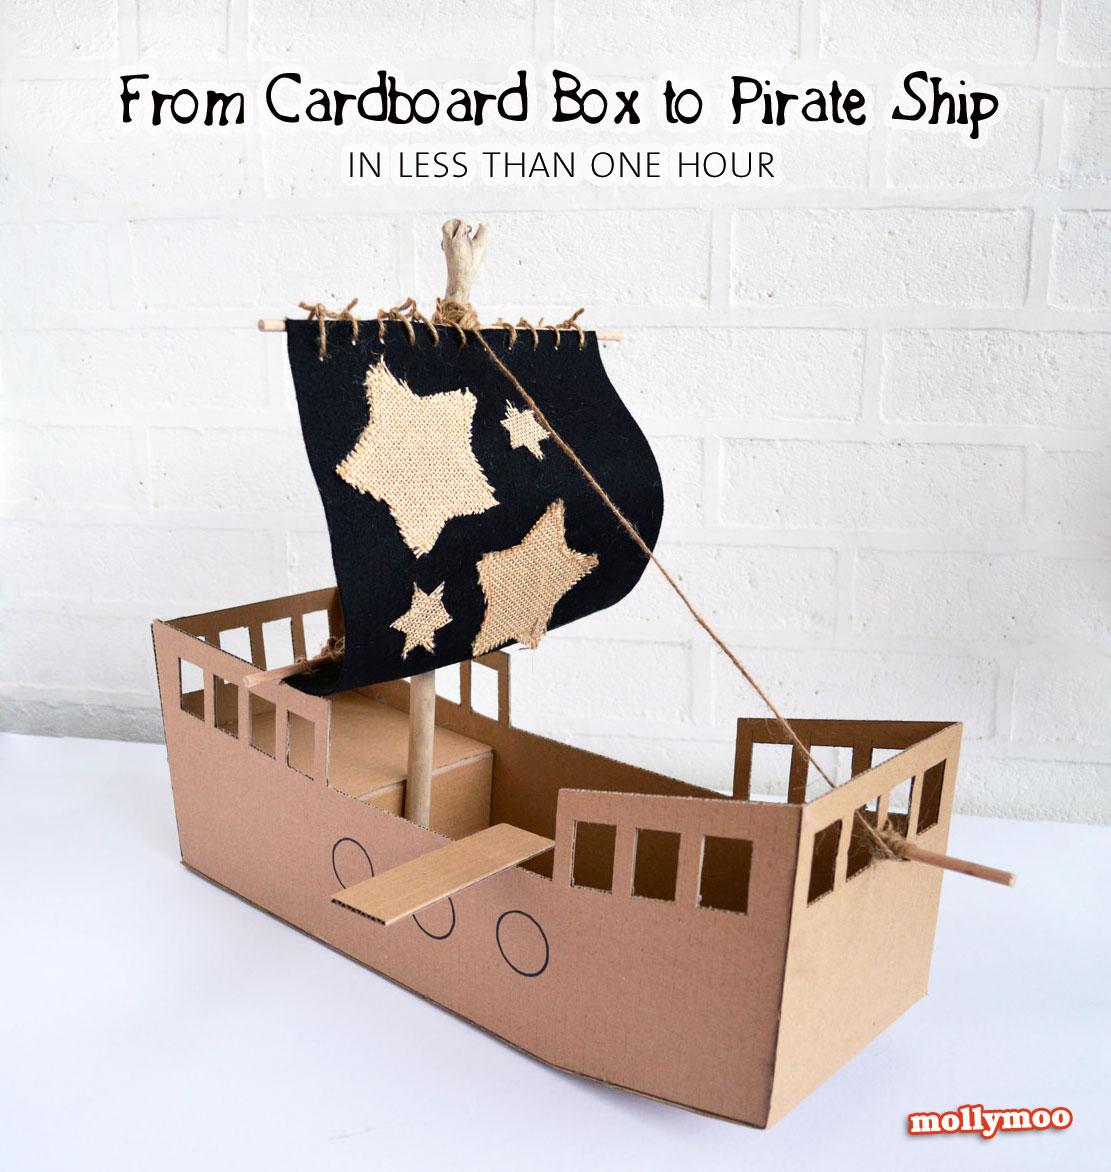 mollymoo-cardboard-pirate-ship-pinterest